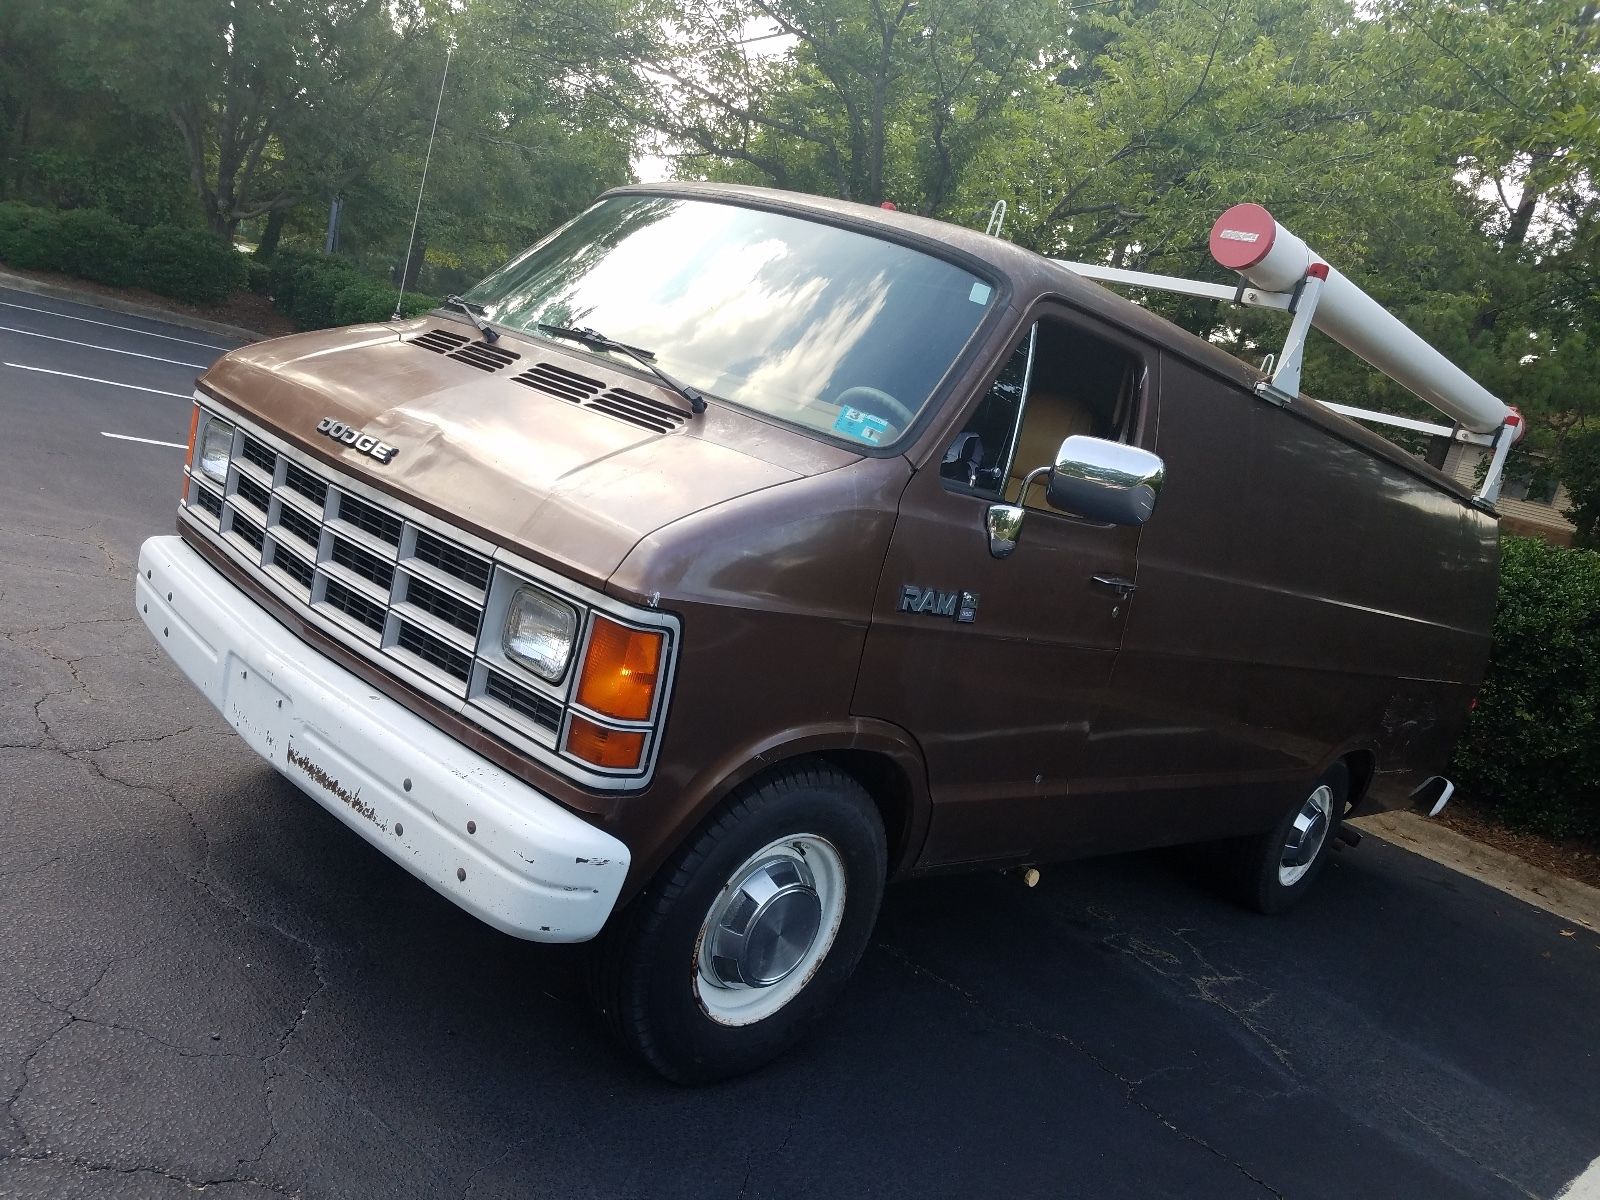 This Big Brown Dodge Ram 350 Van Was Originally A FBI Surveillance Van!